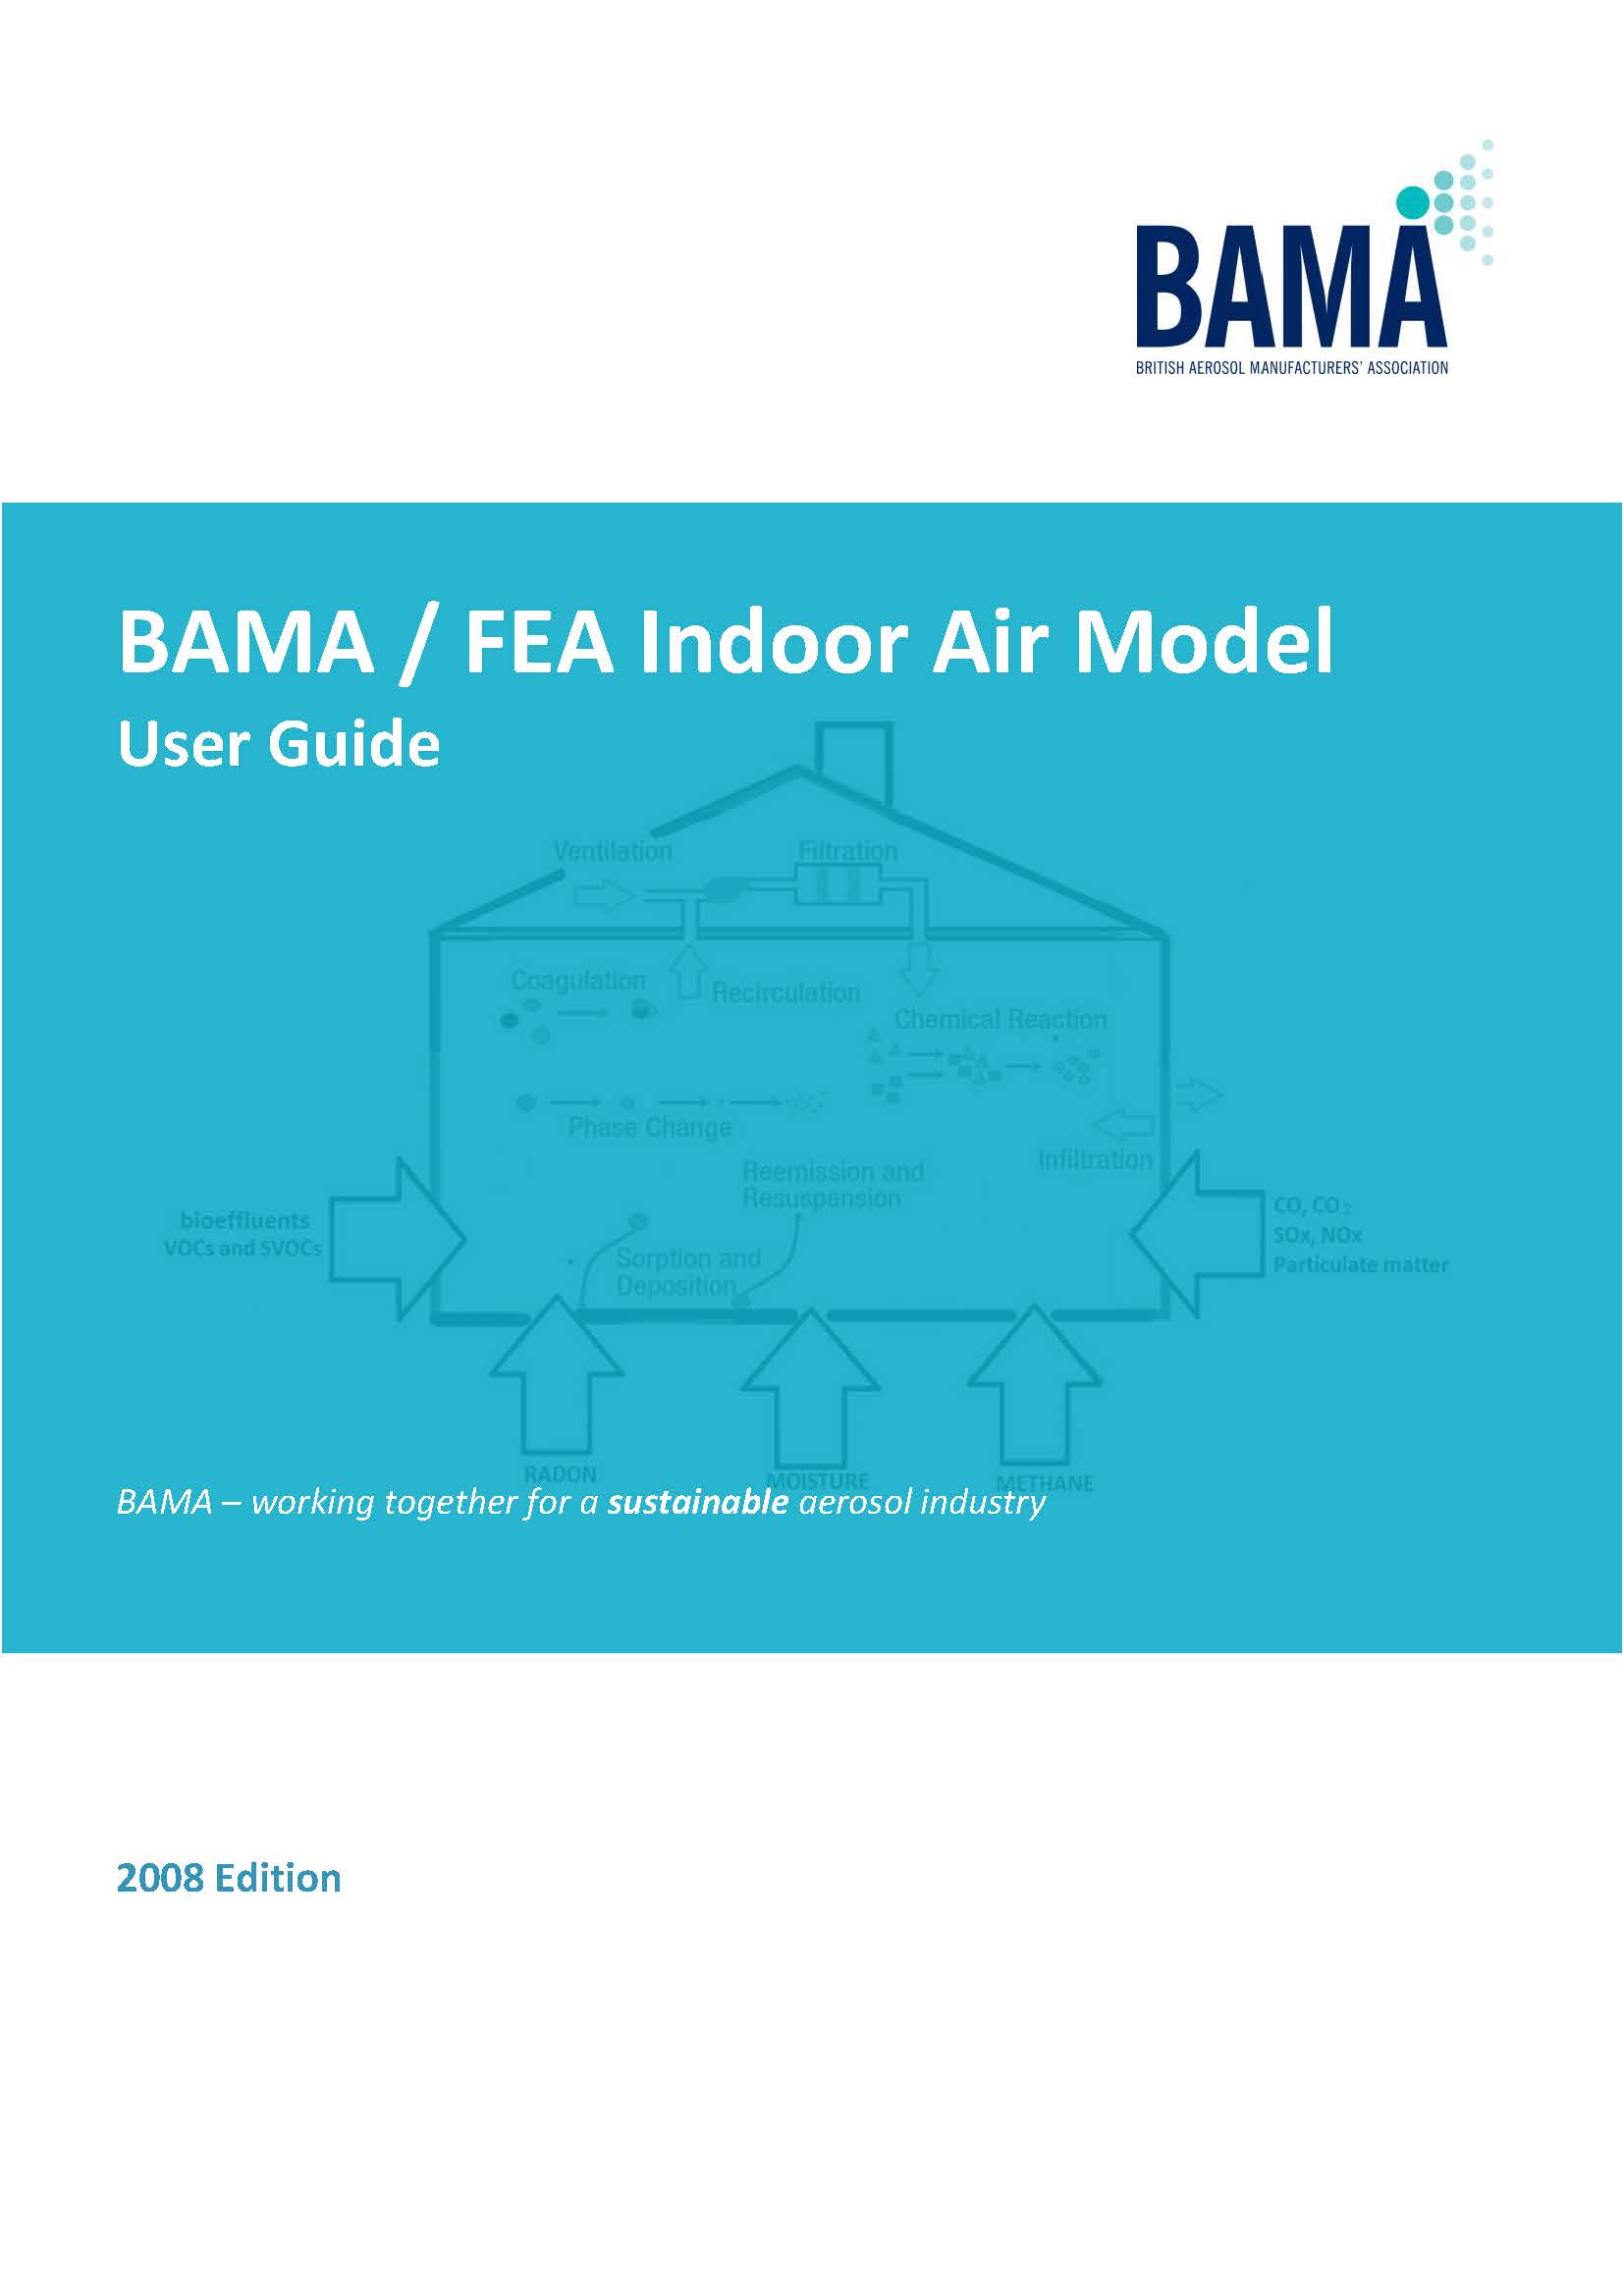 BAMA Indoor Air Model - Issue 1